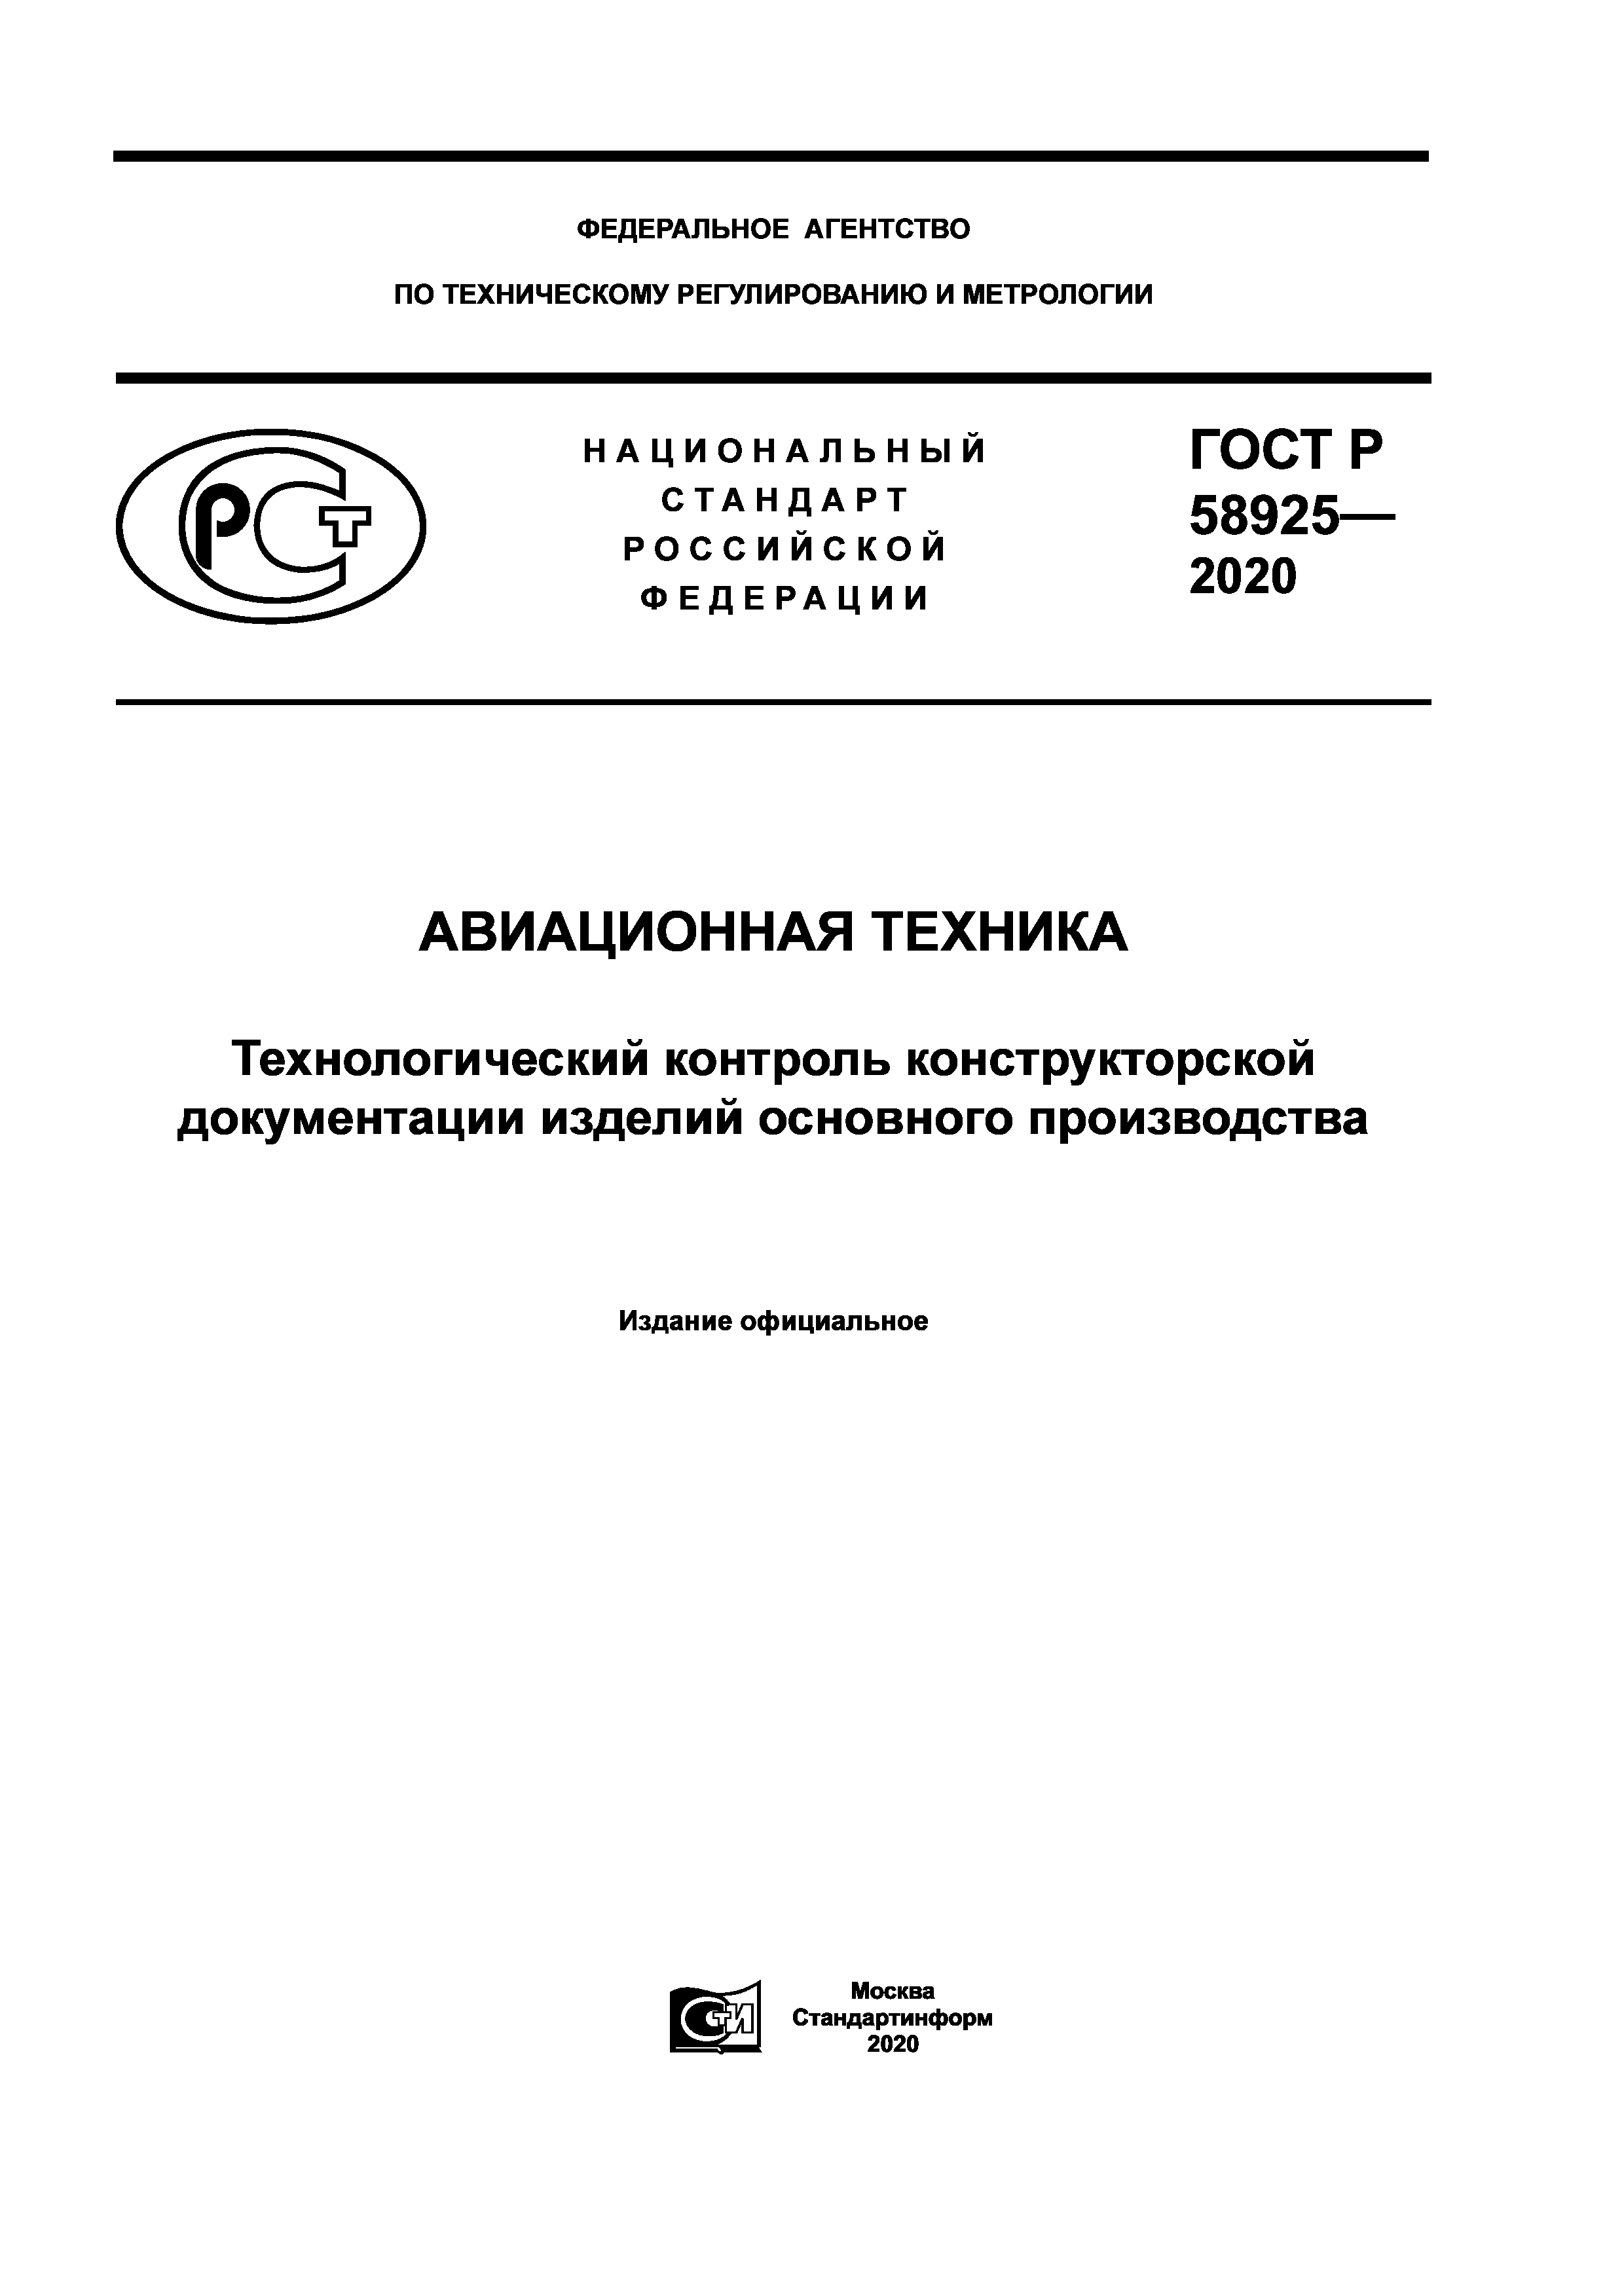 ГОСТ Р 58925-2020